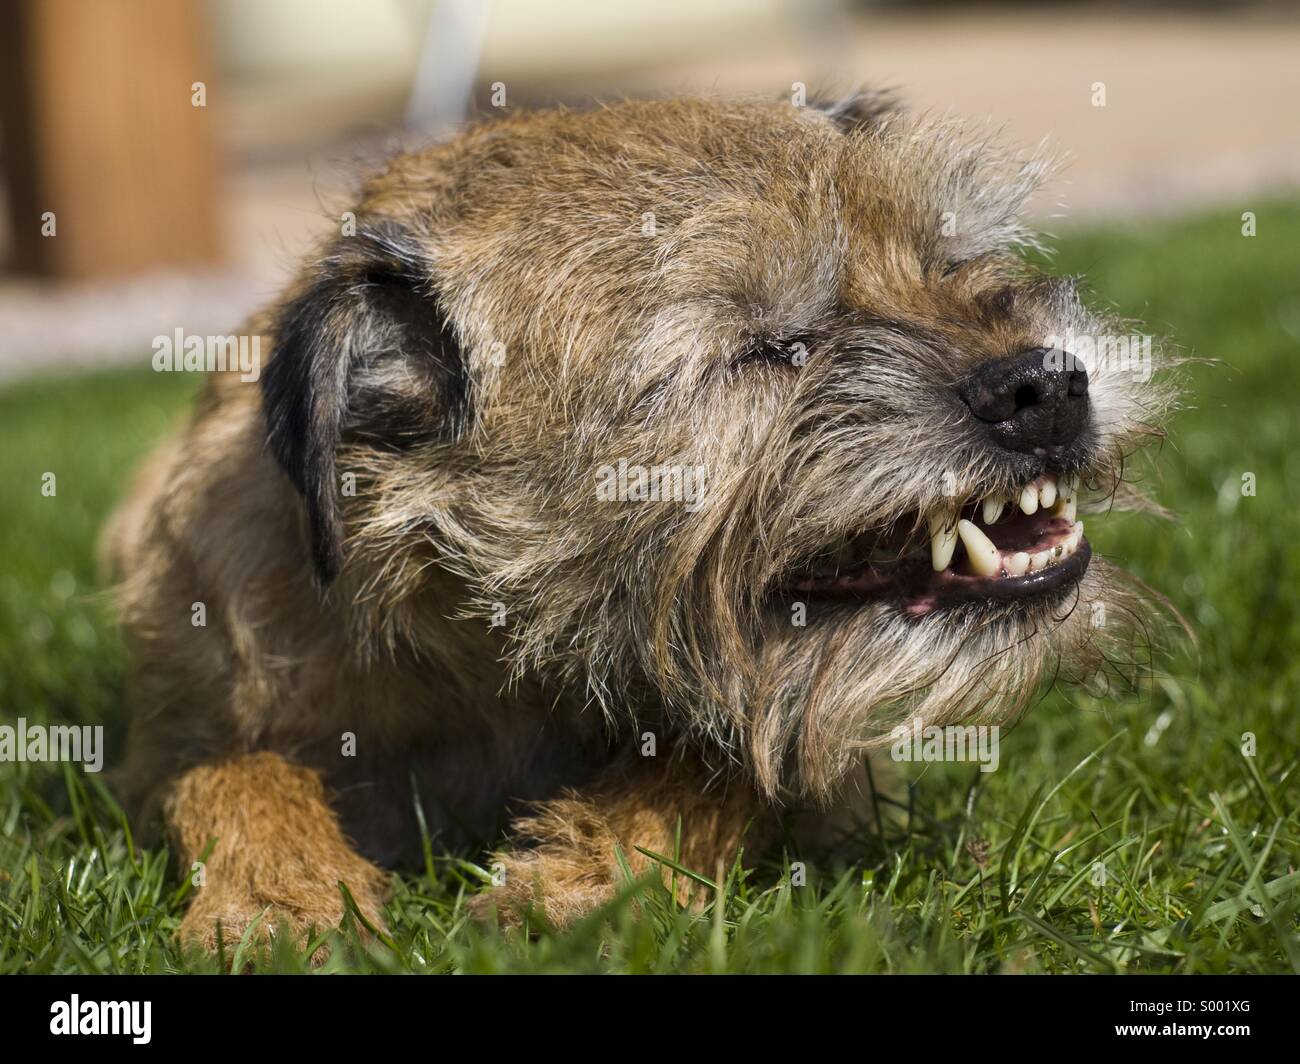 Dog sneeze Stock Photo